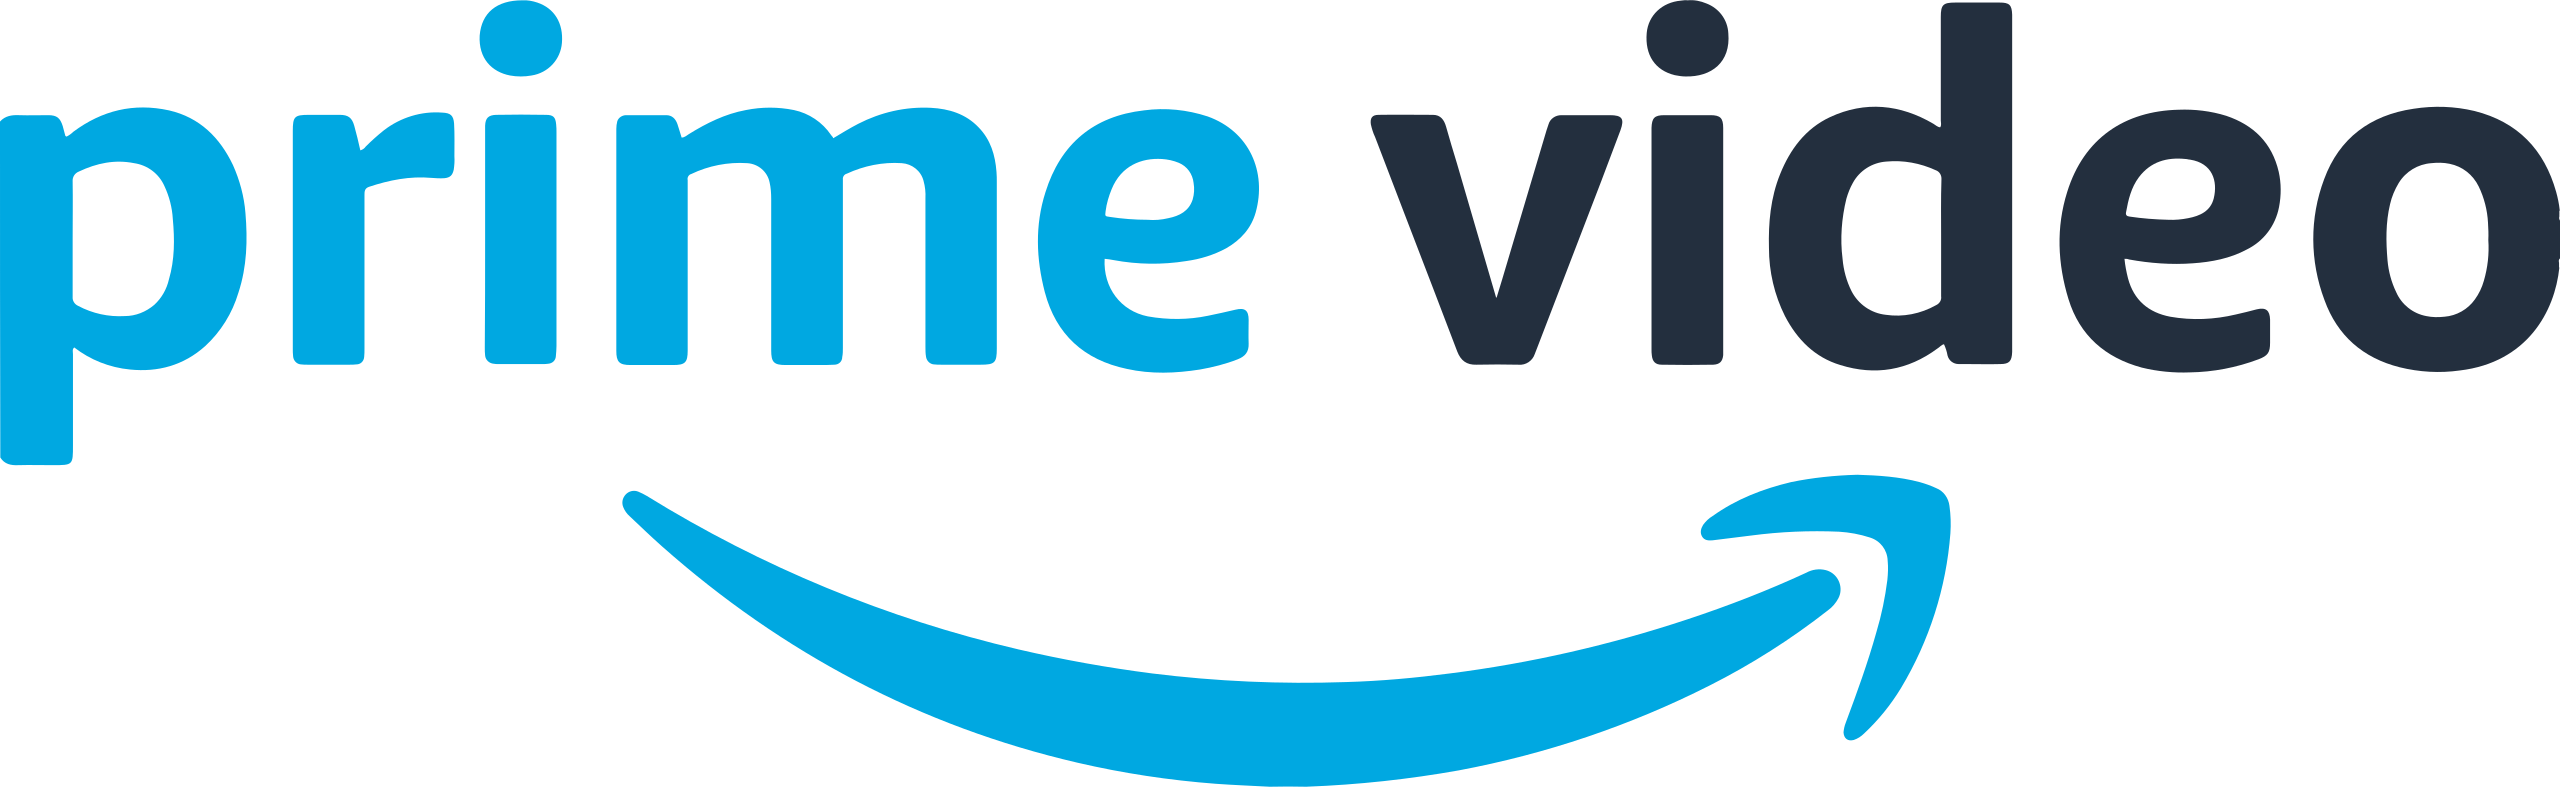 Amazon_Prime_Video_logo.svg.png